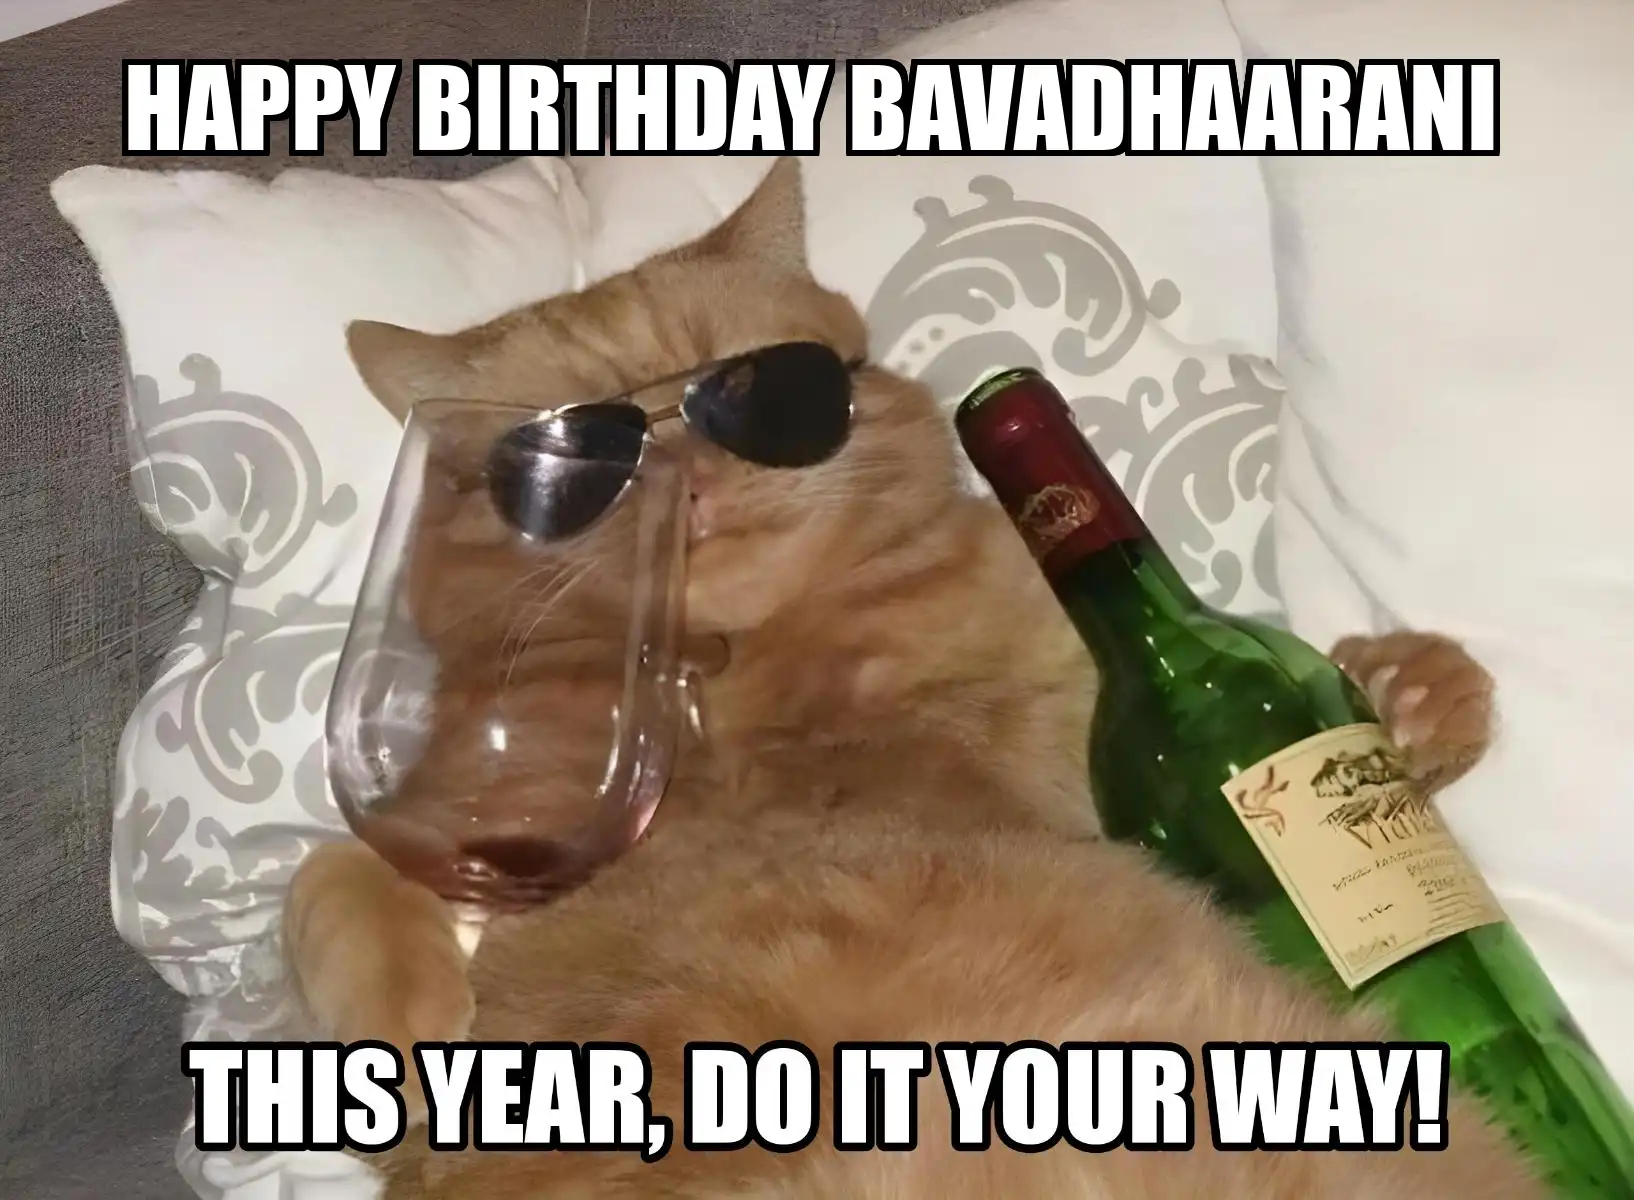 Happy Birthday Bavadhaarani This Year Do It Your Way Meme